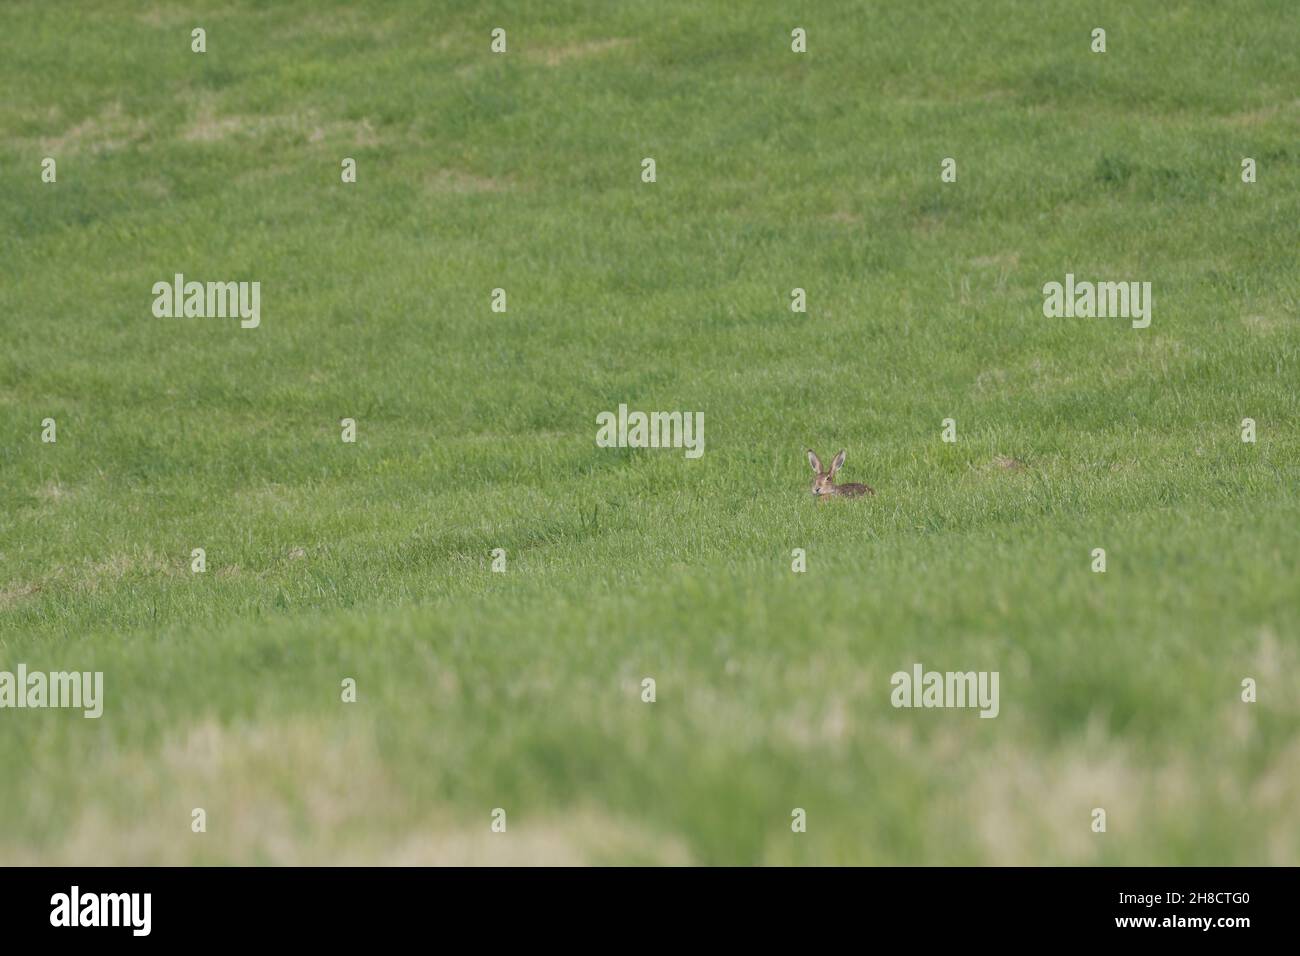 Cute bunny running in a green grassy field Stock Photo